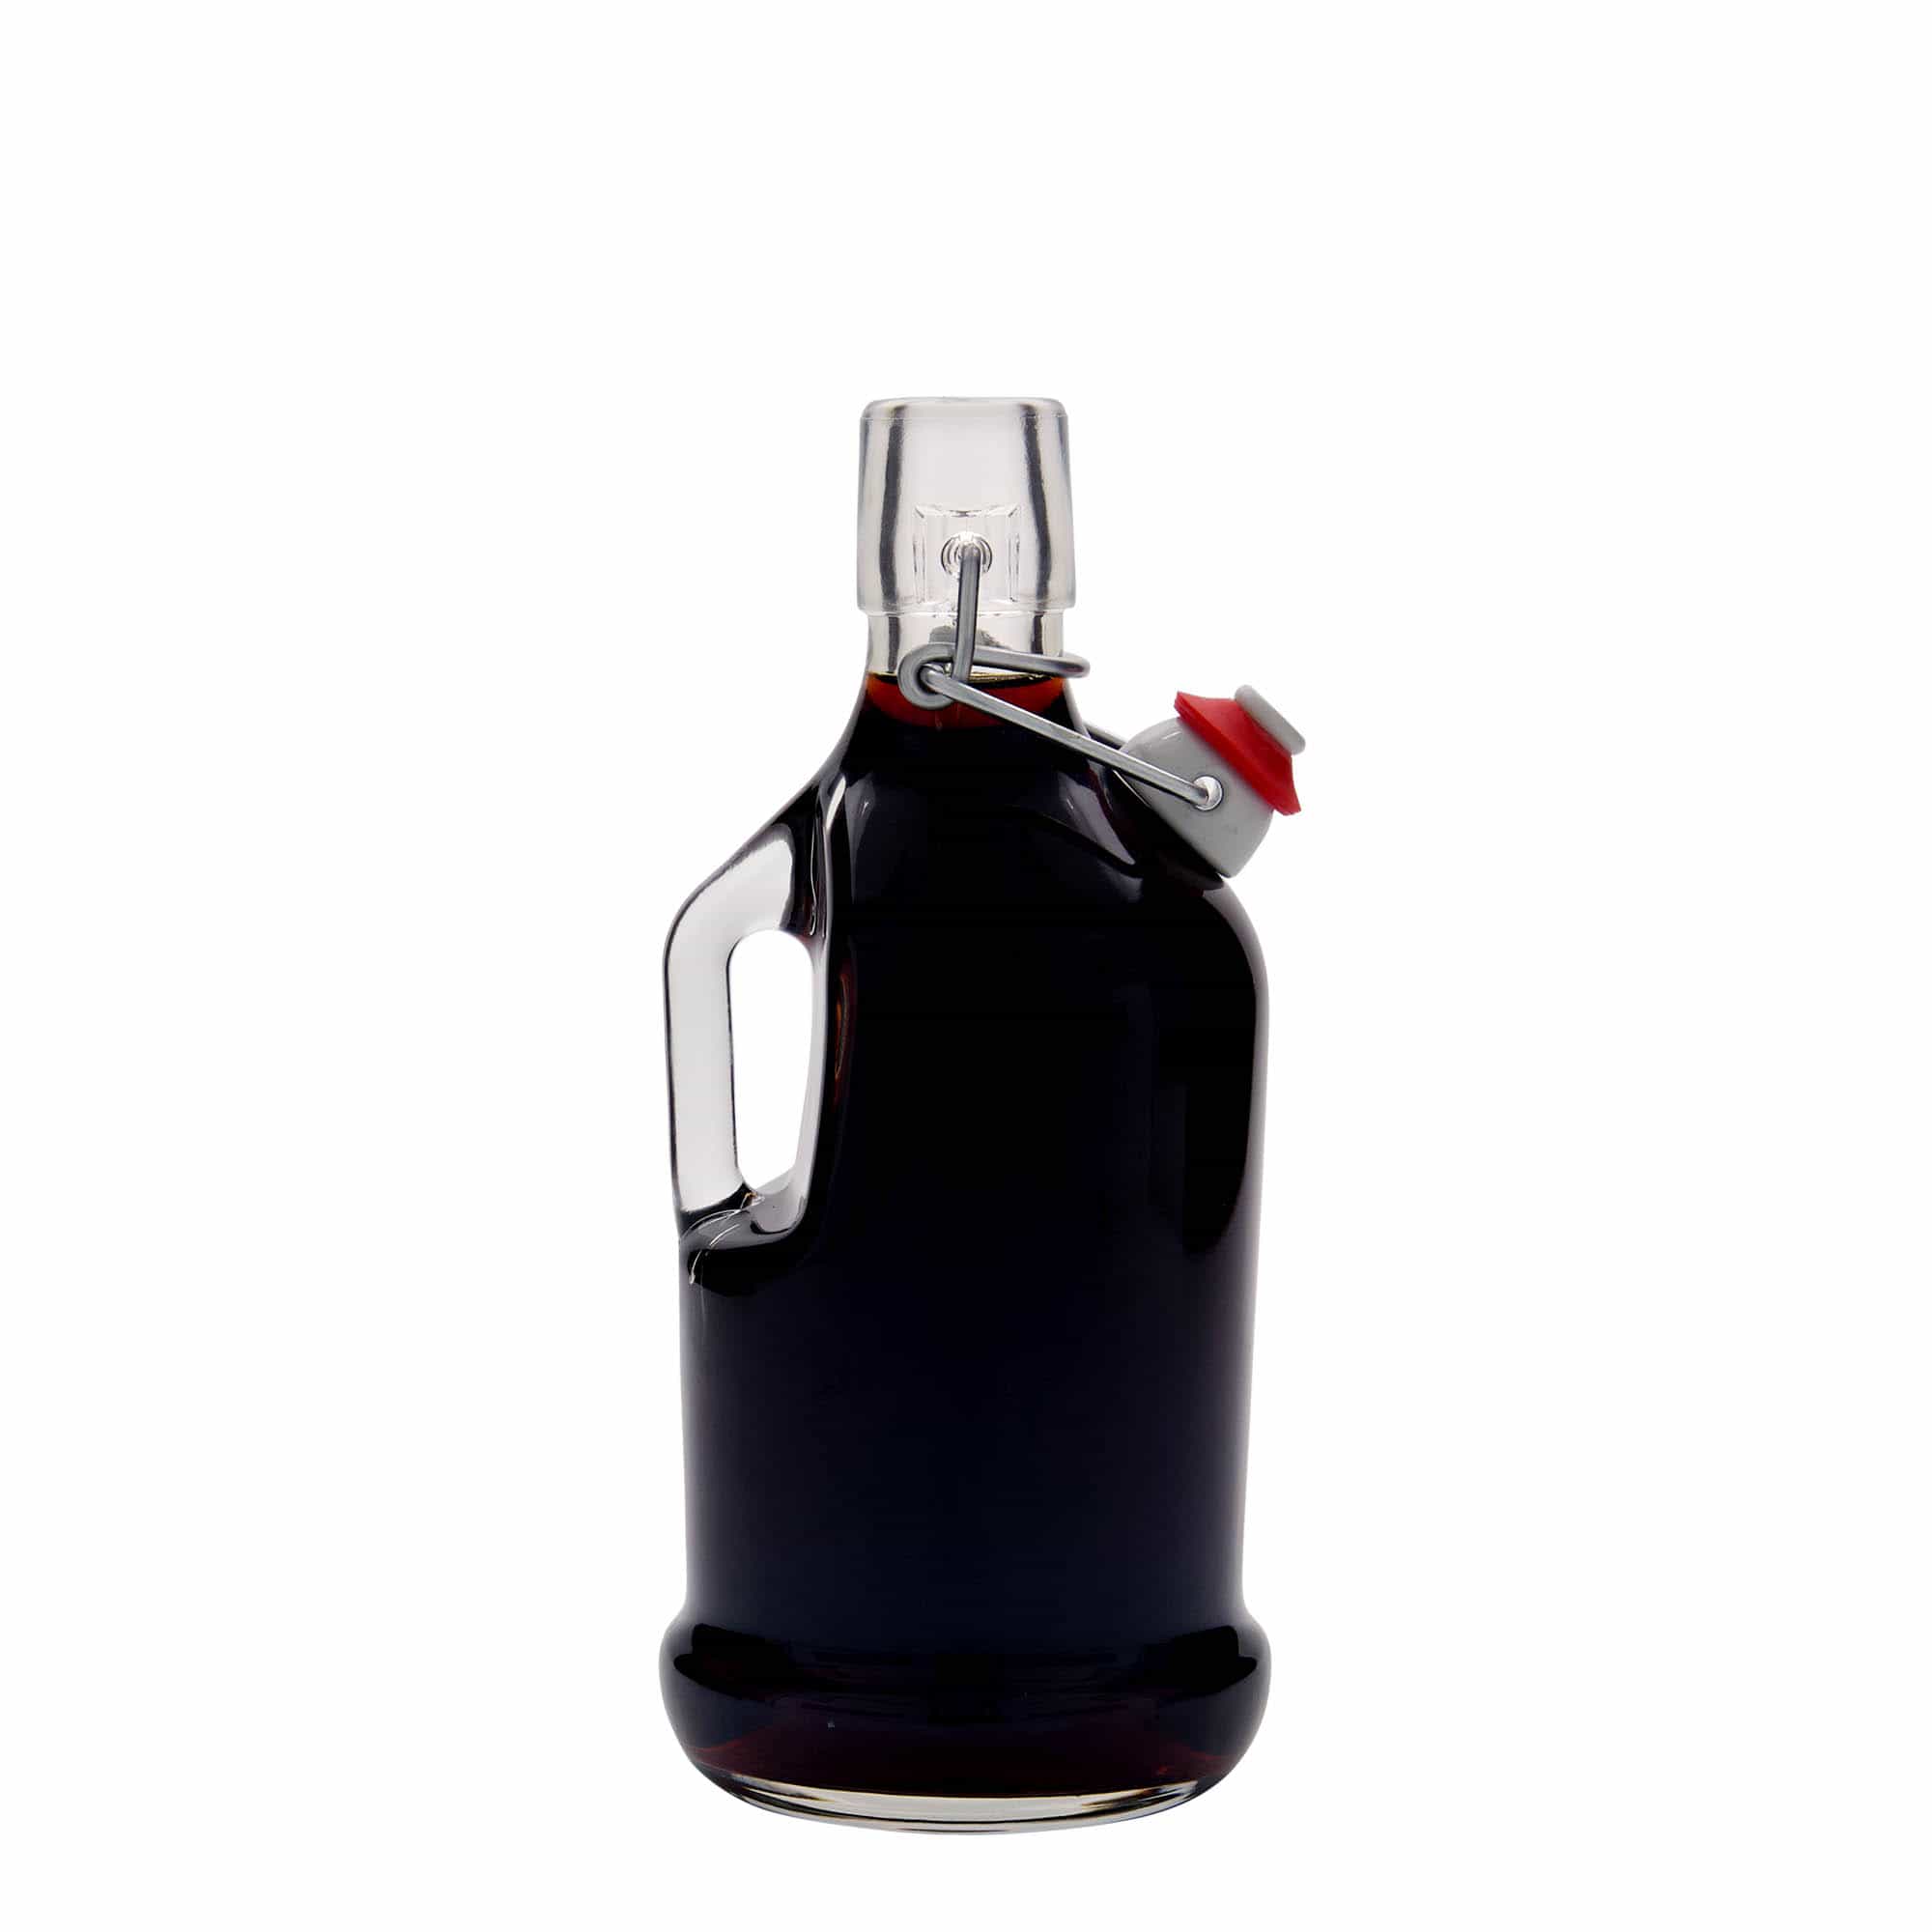 500 ml glass bottle 'Classica', closure: swing top